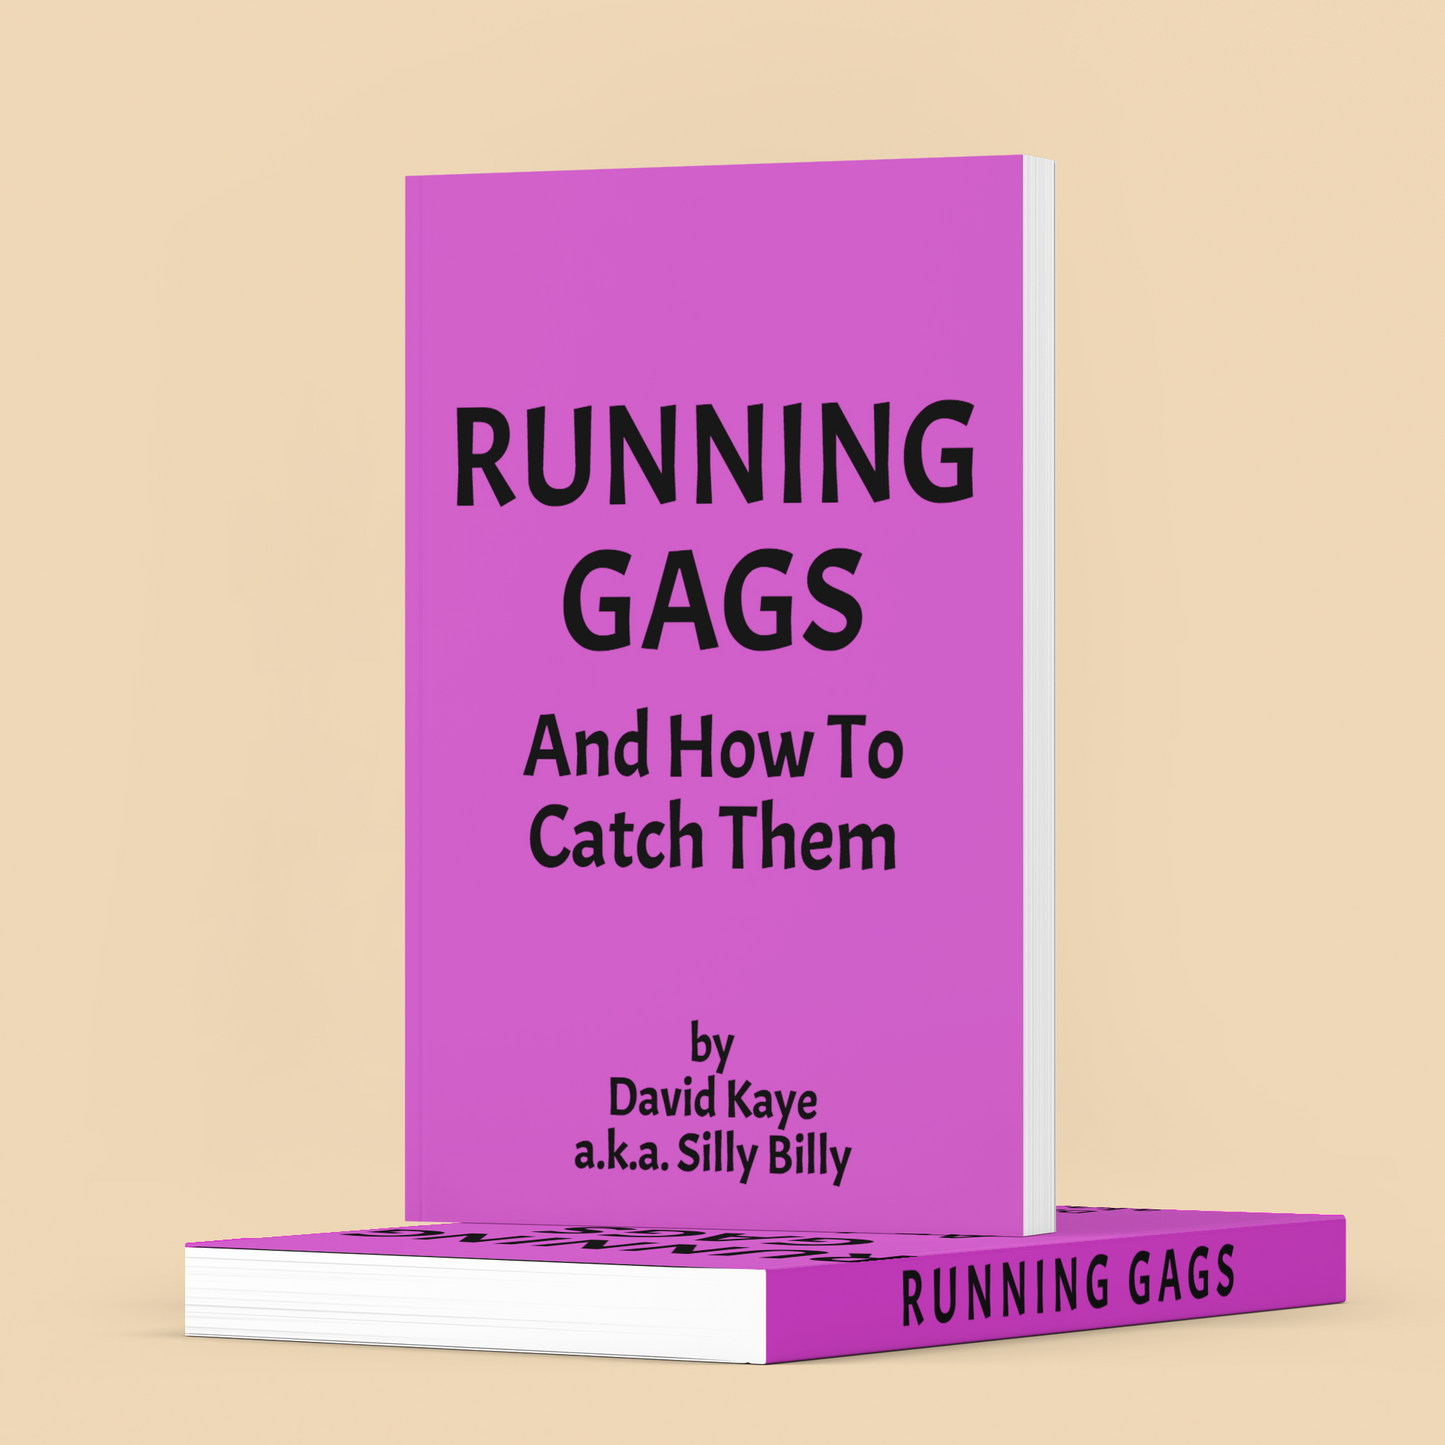 Running Gags Ebook